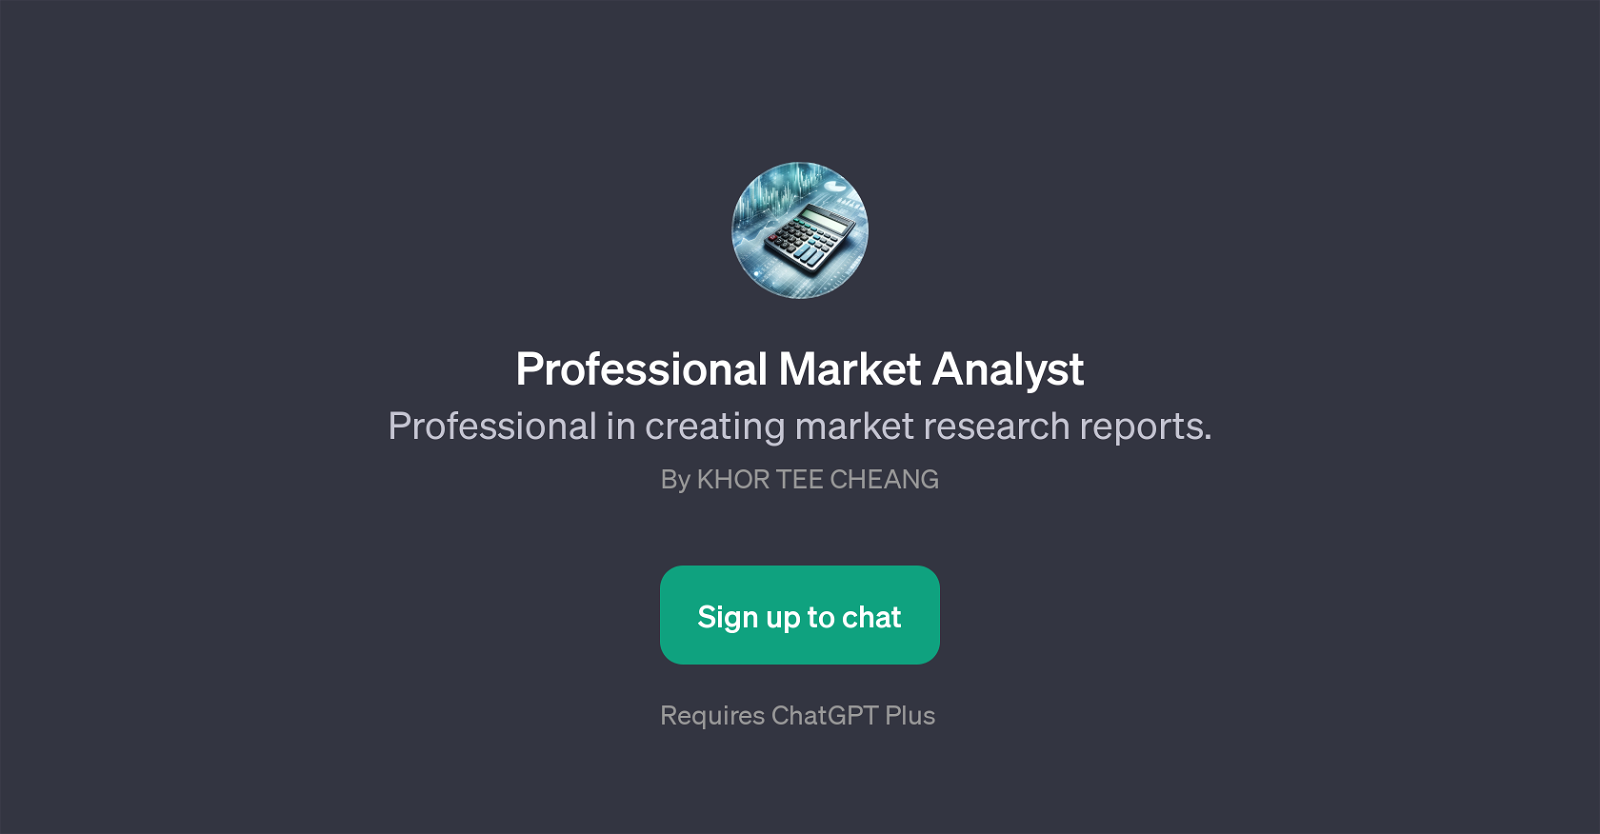 Professional Market Analyst website